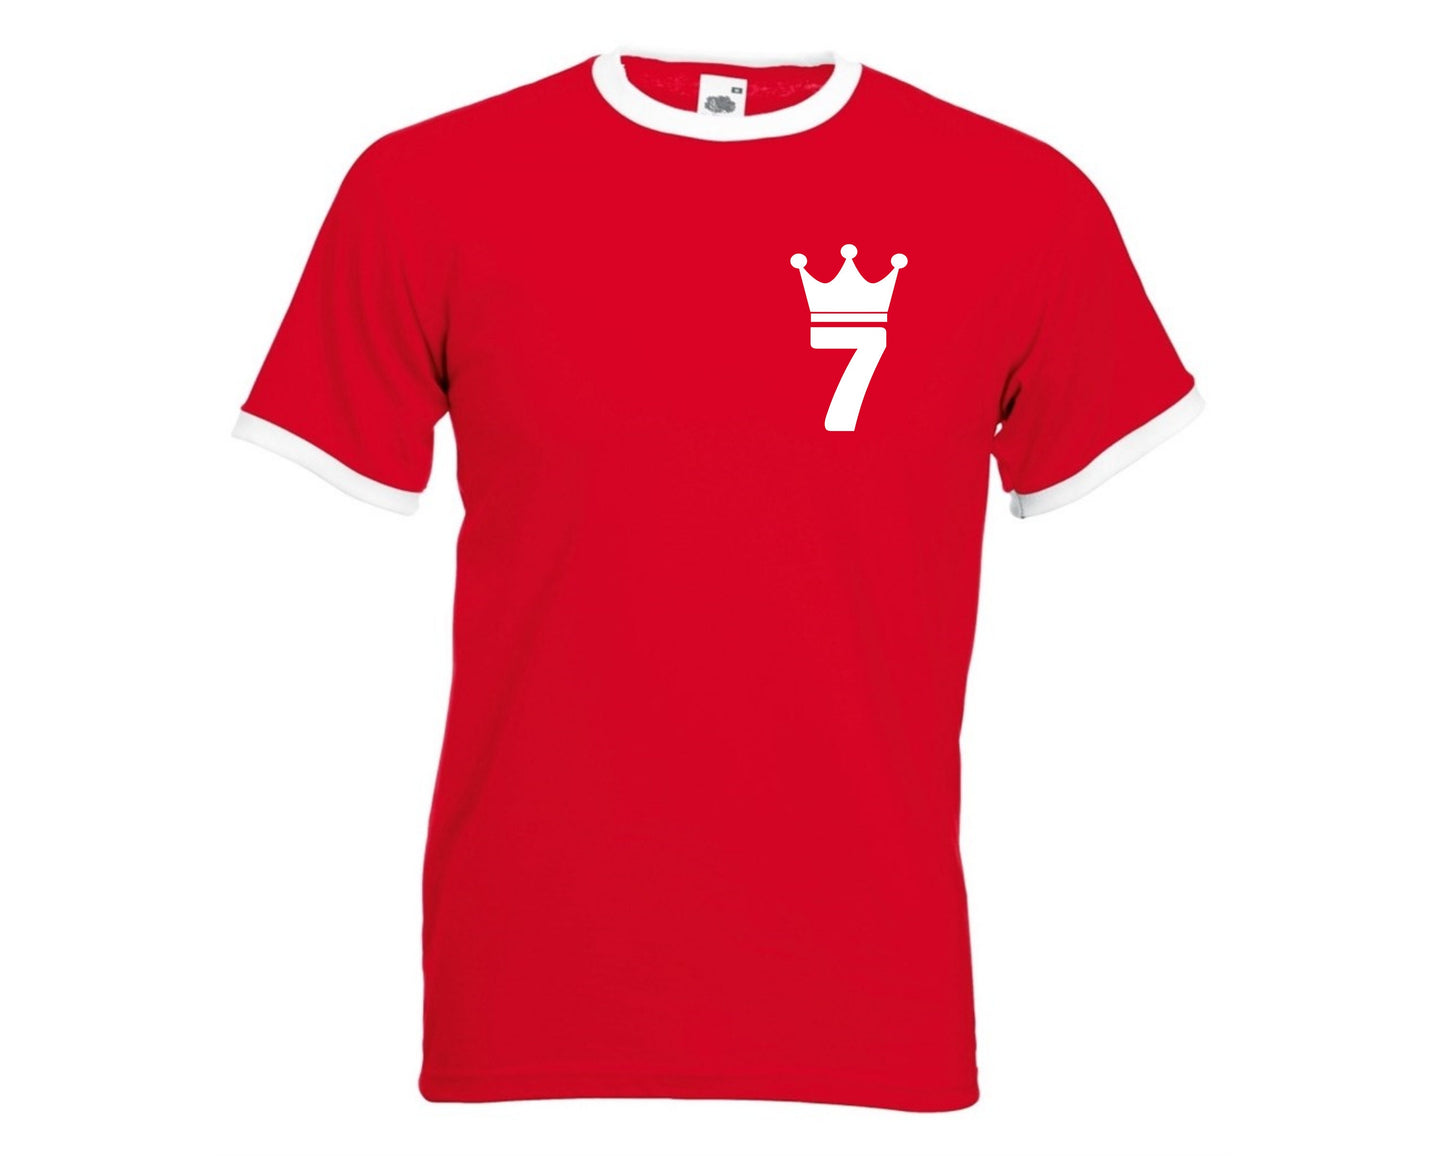 King Eric Cantona 7 T-Shirt. Mens